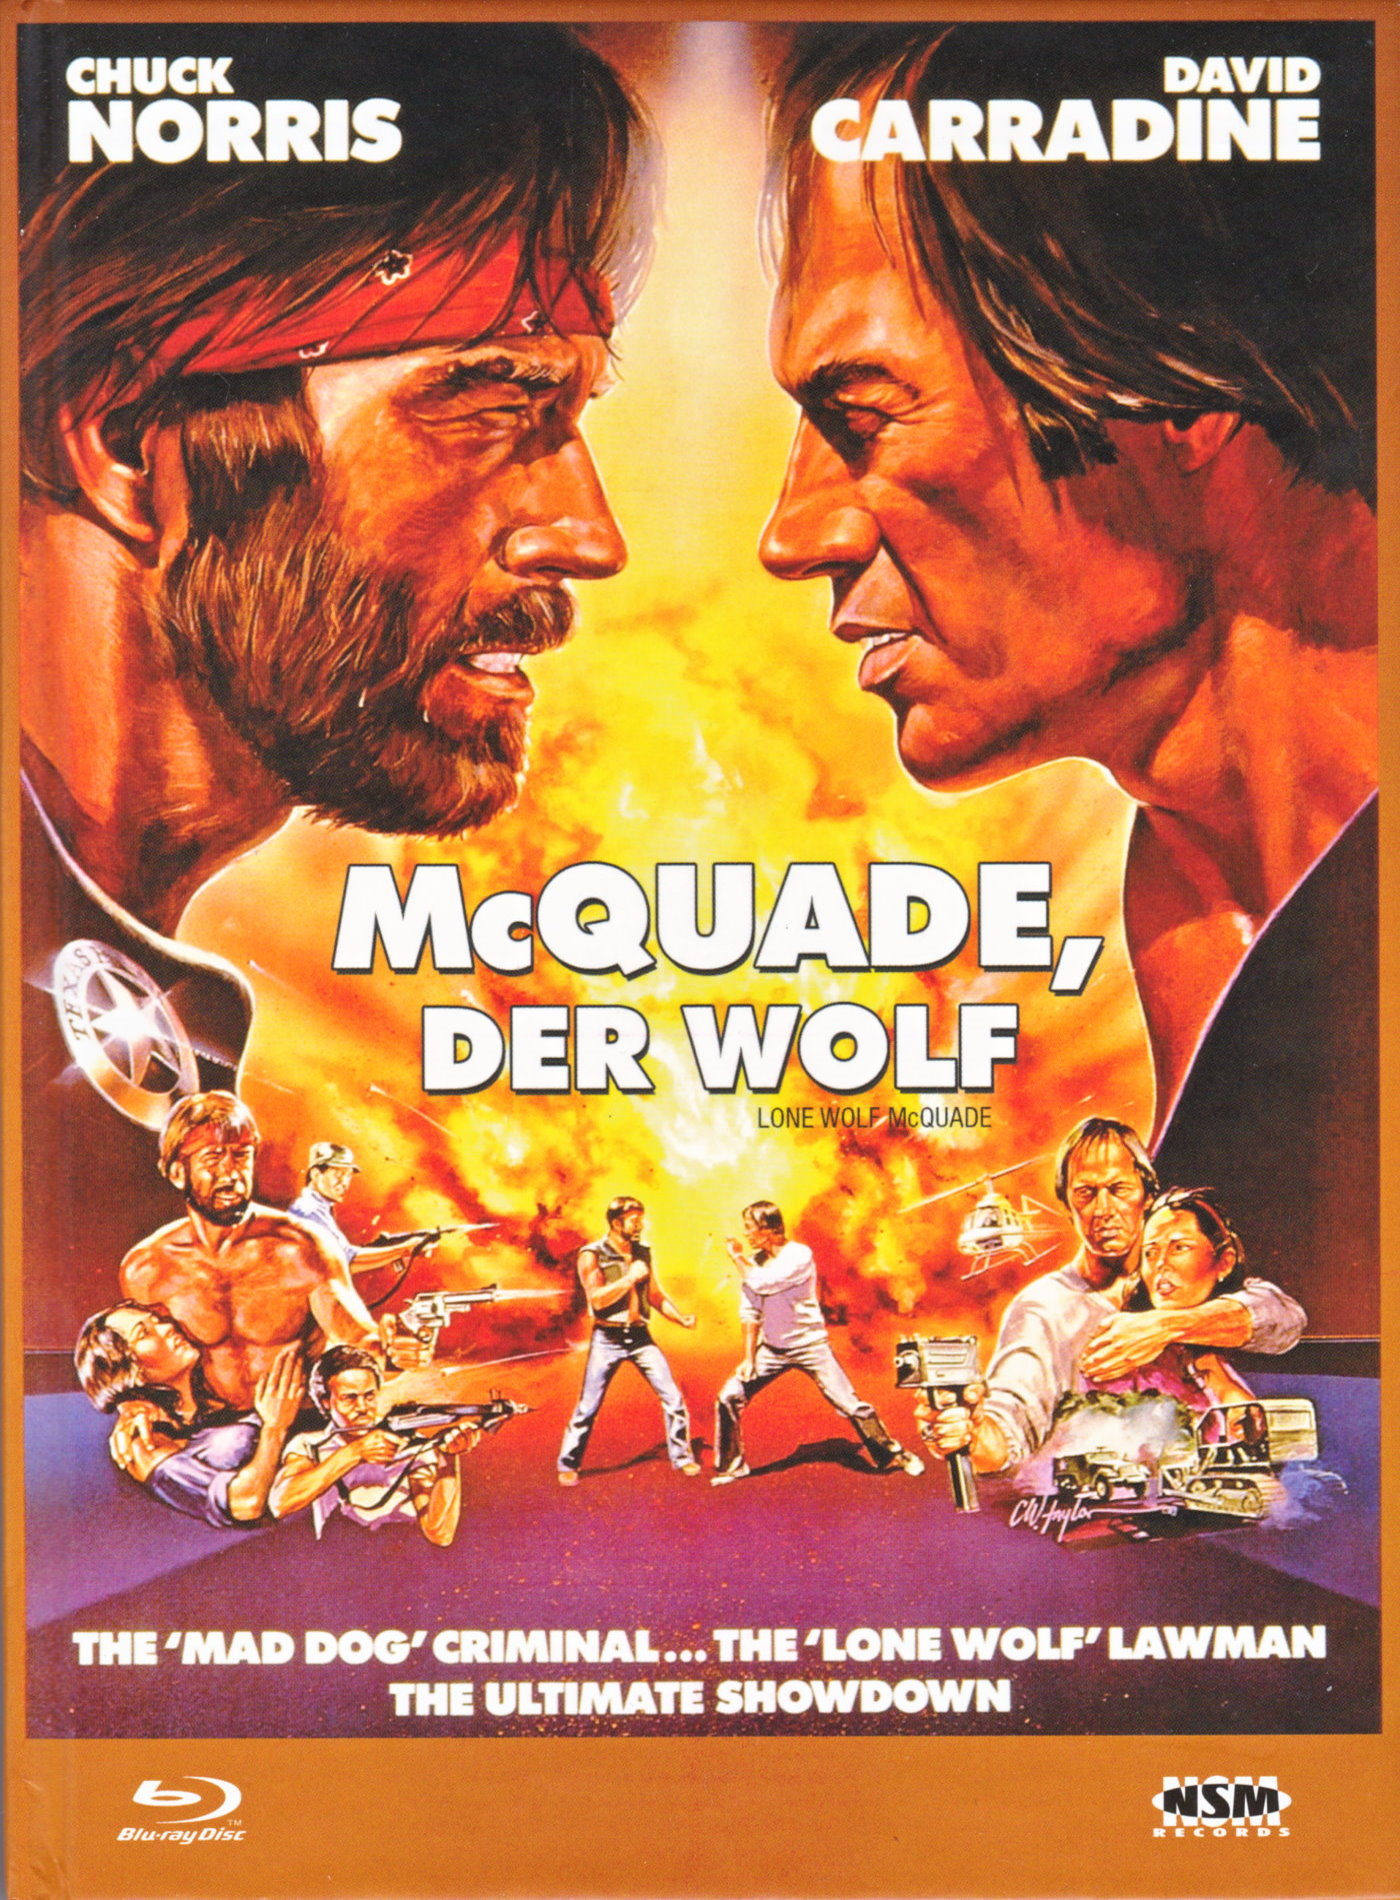 Cover - McQuade - Der Wolf.jpg